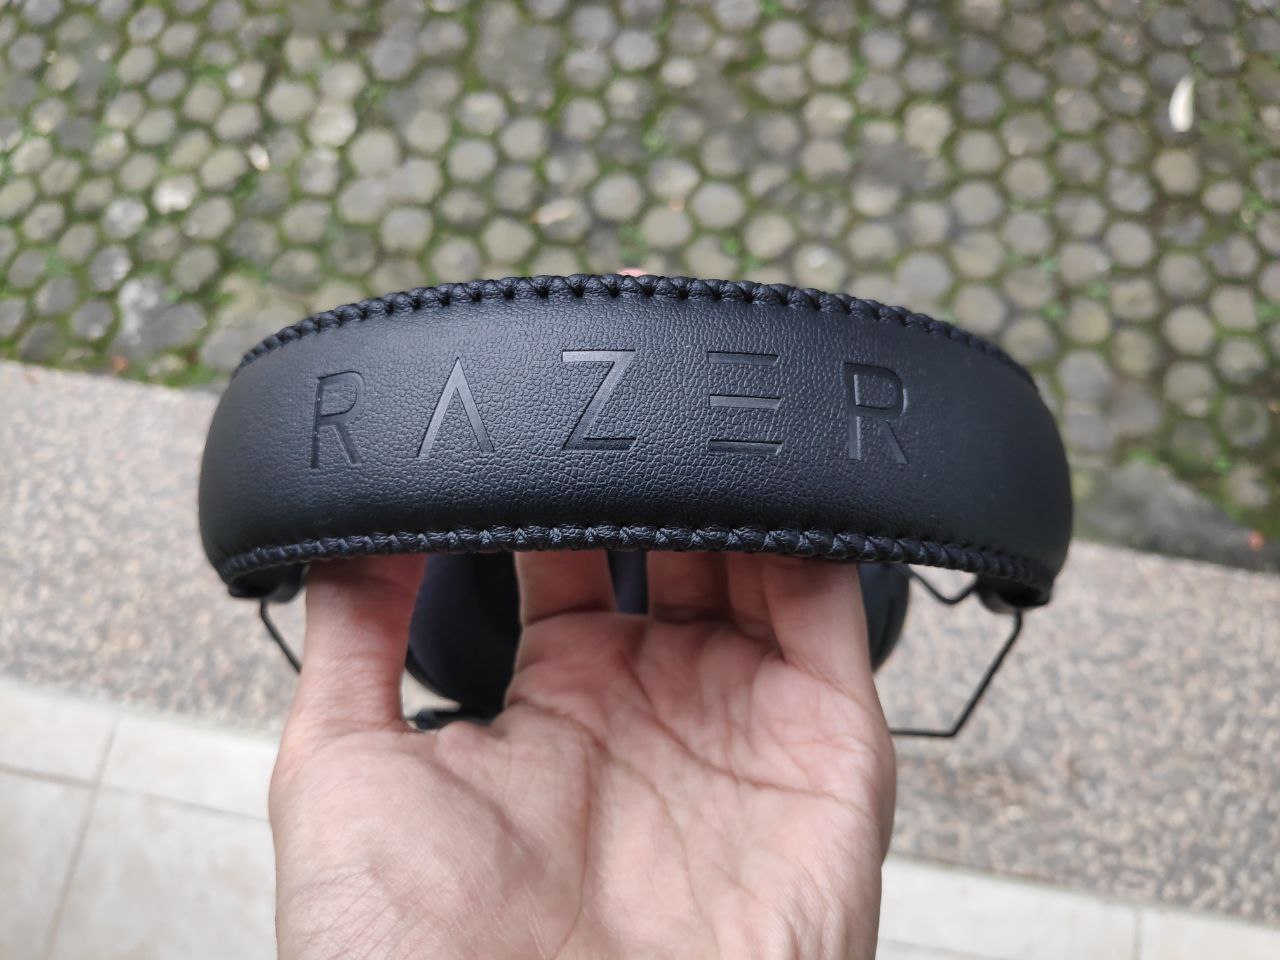 Branding Razer yang terselubung di bagian headband dari Razer Blackshark V2 Pro. Foto oleh Akbar Priono - Hybrid.co.id